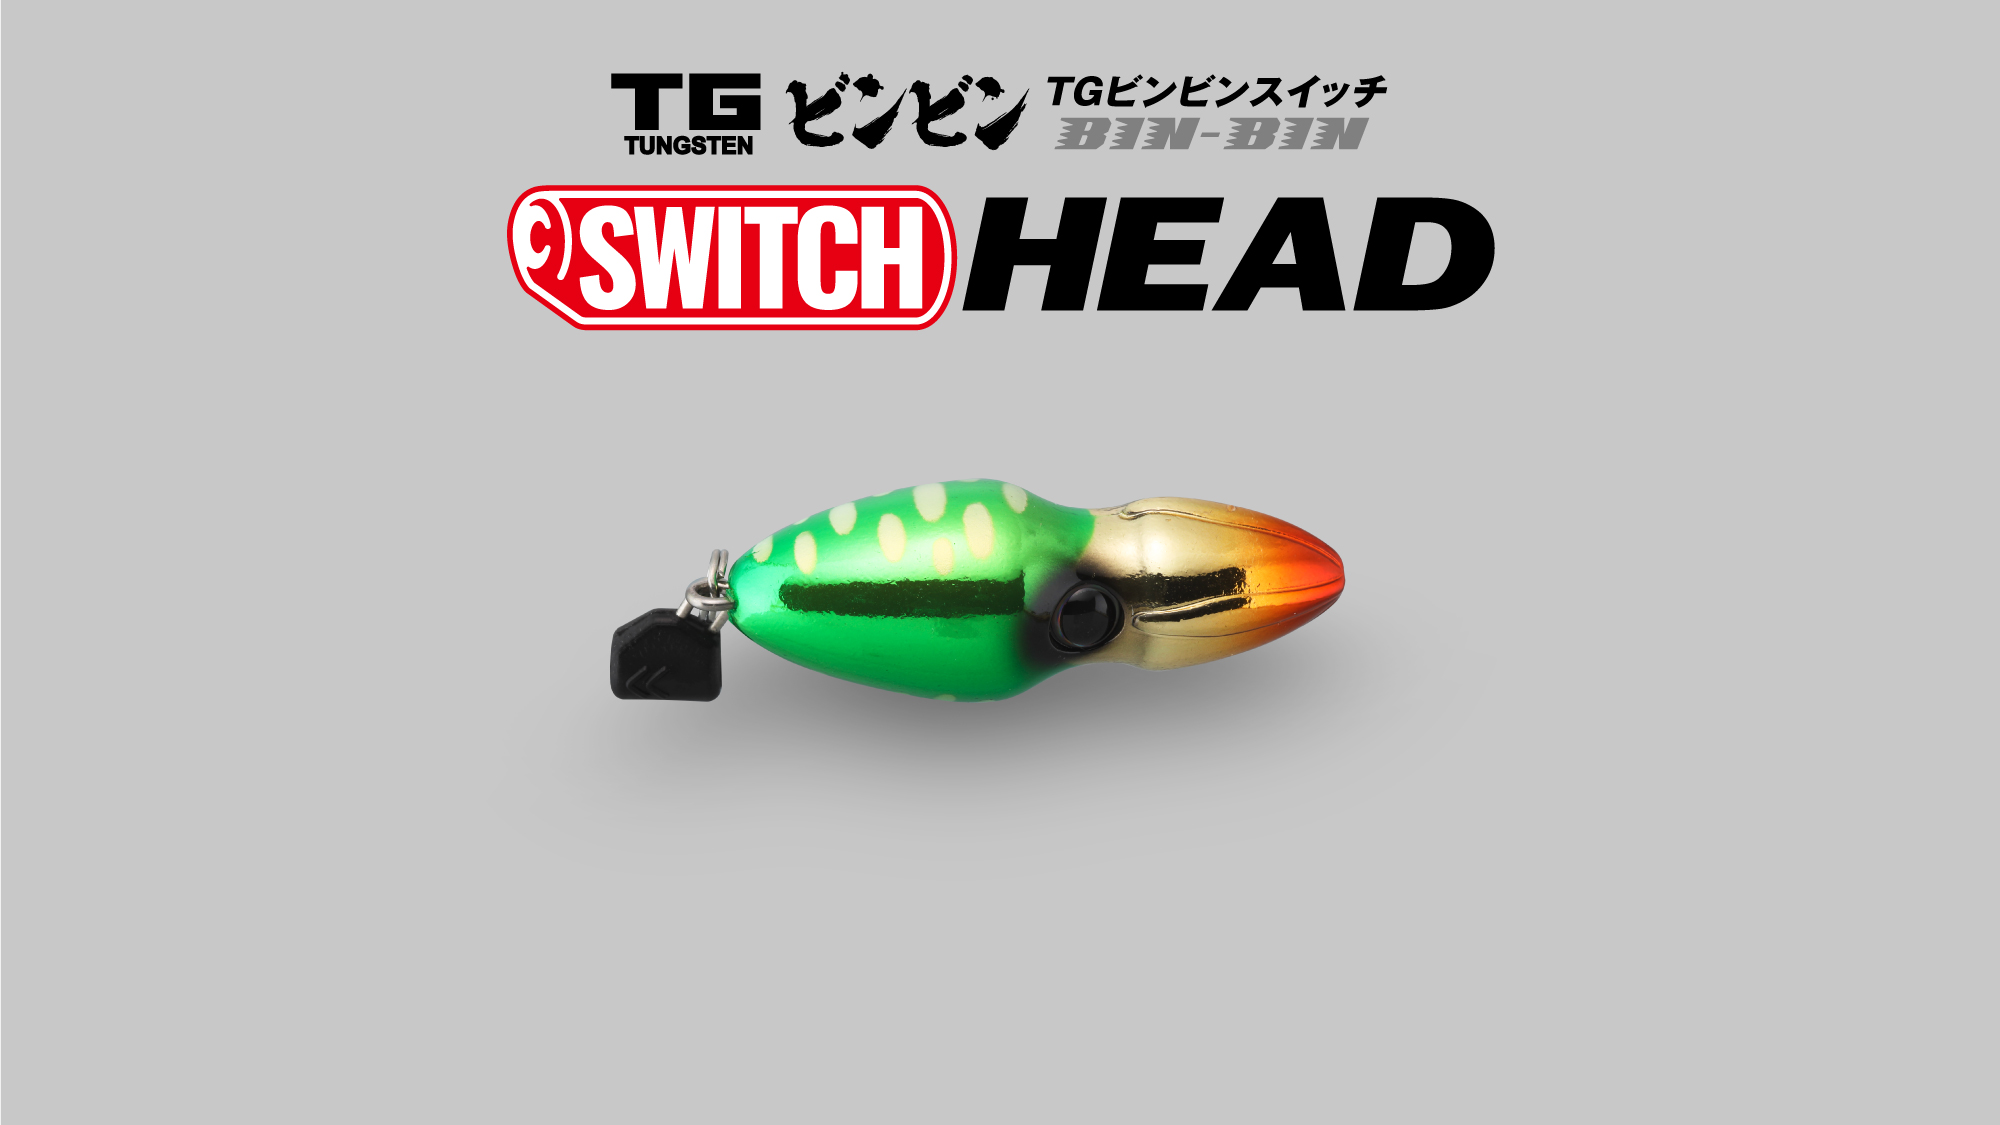  TG BINBIN SWITCH HEAD / TGビンビンスイッチ ヘッド(タングステン製）